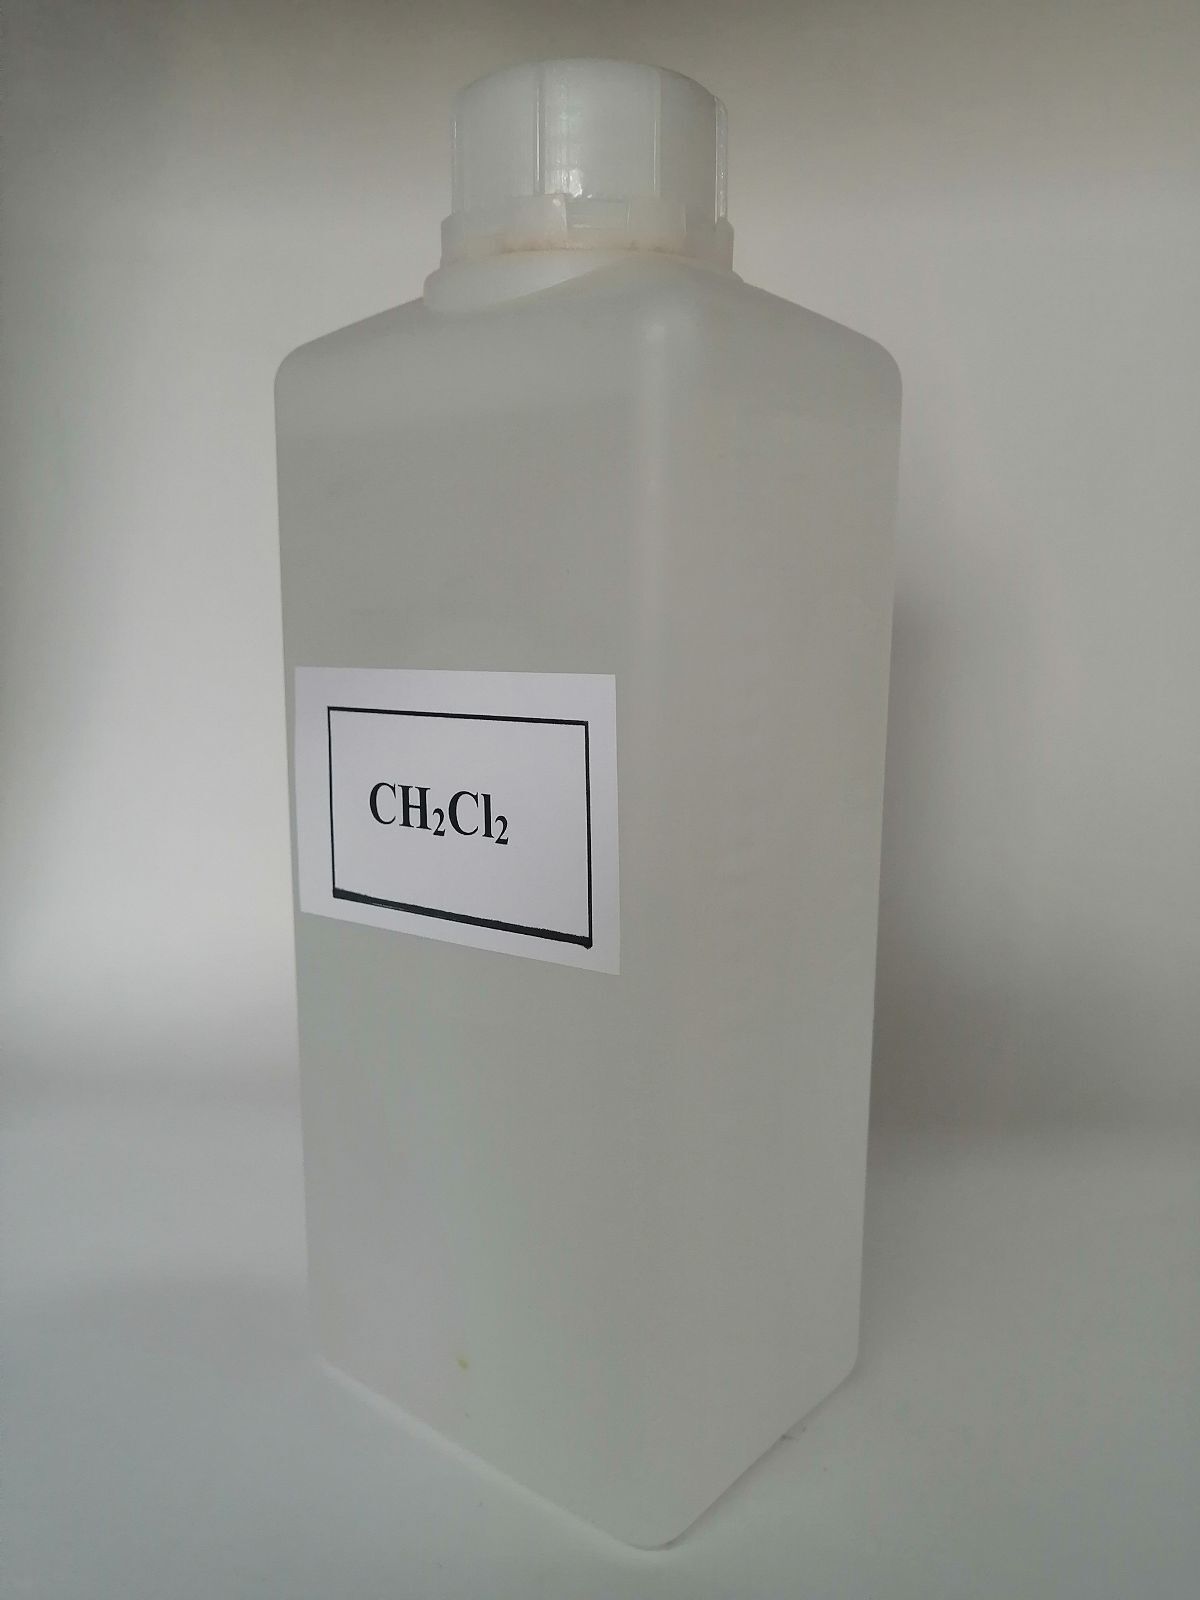 Метилен хлористый имп. 1.3 кг